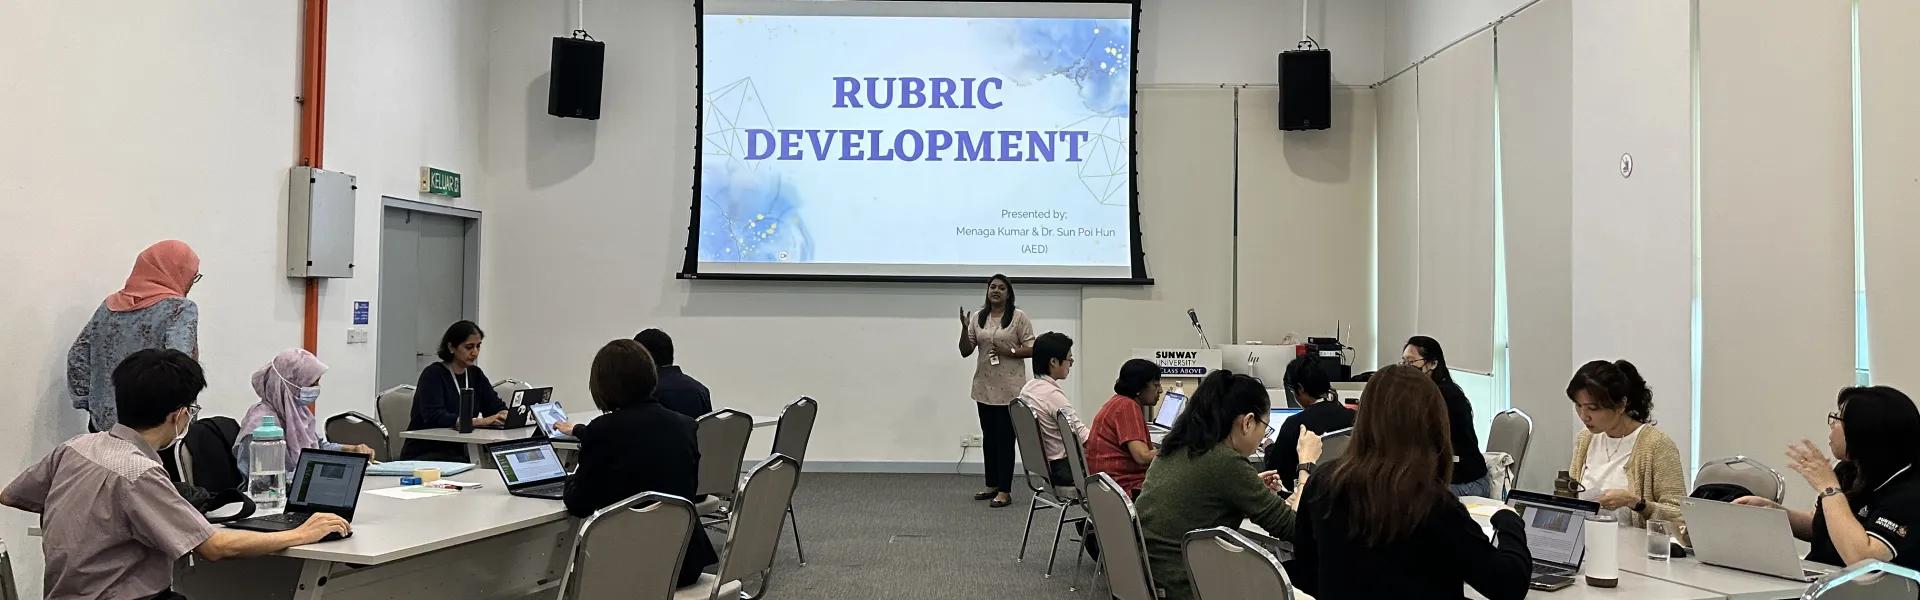 rubric development